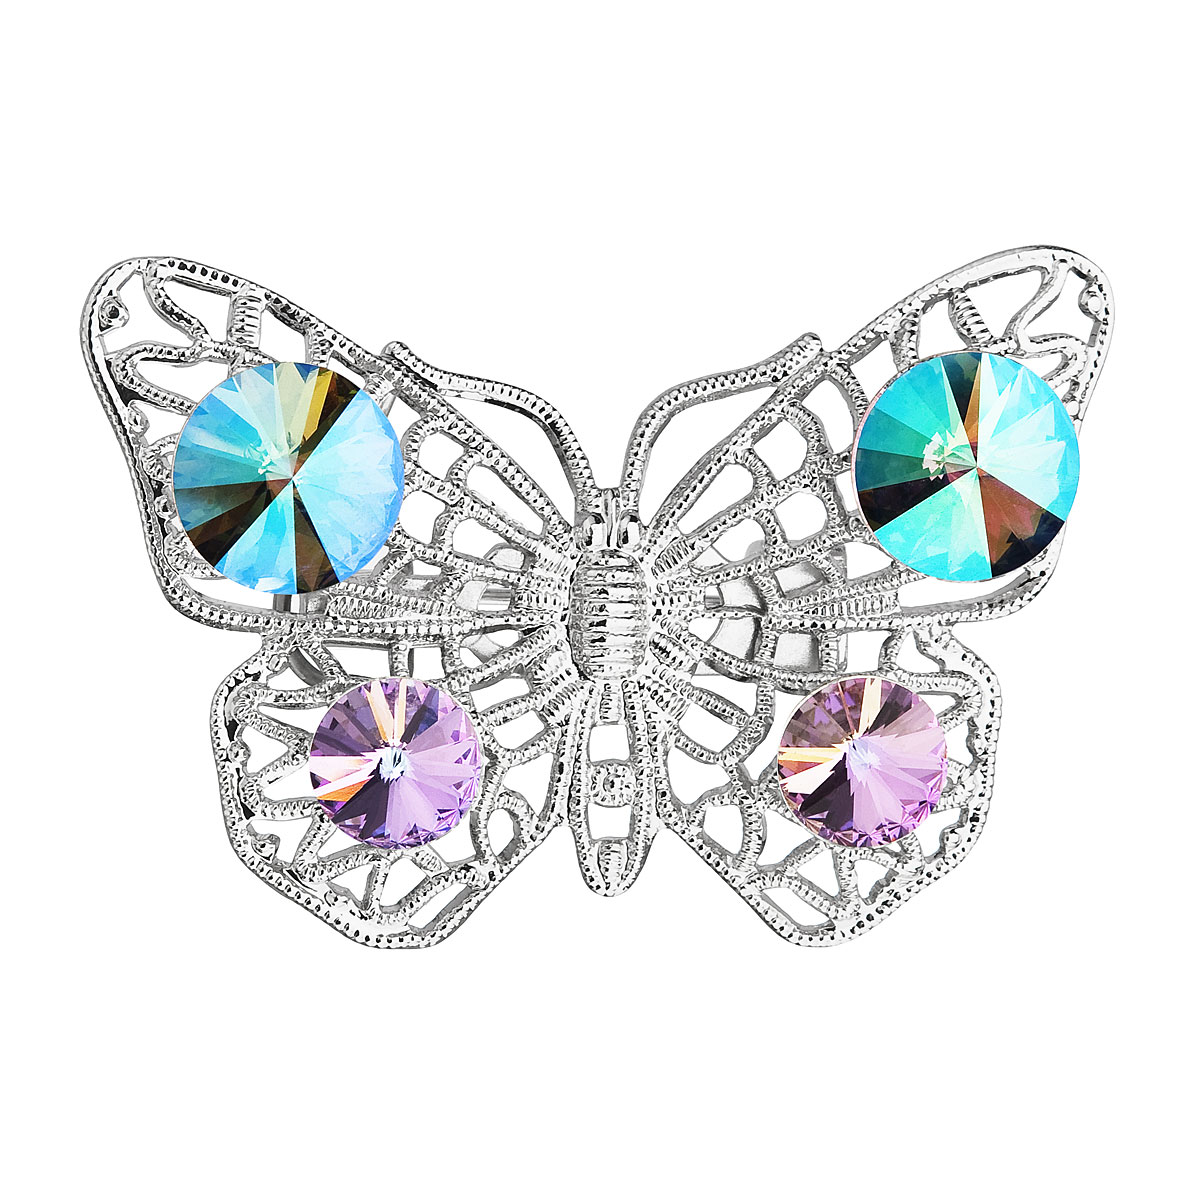 Brož bižuterie se Swarovski krystaly zelený fialový motýl 58002.5